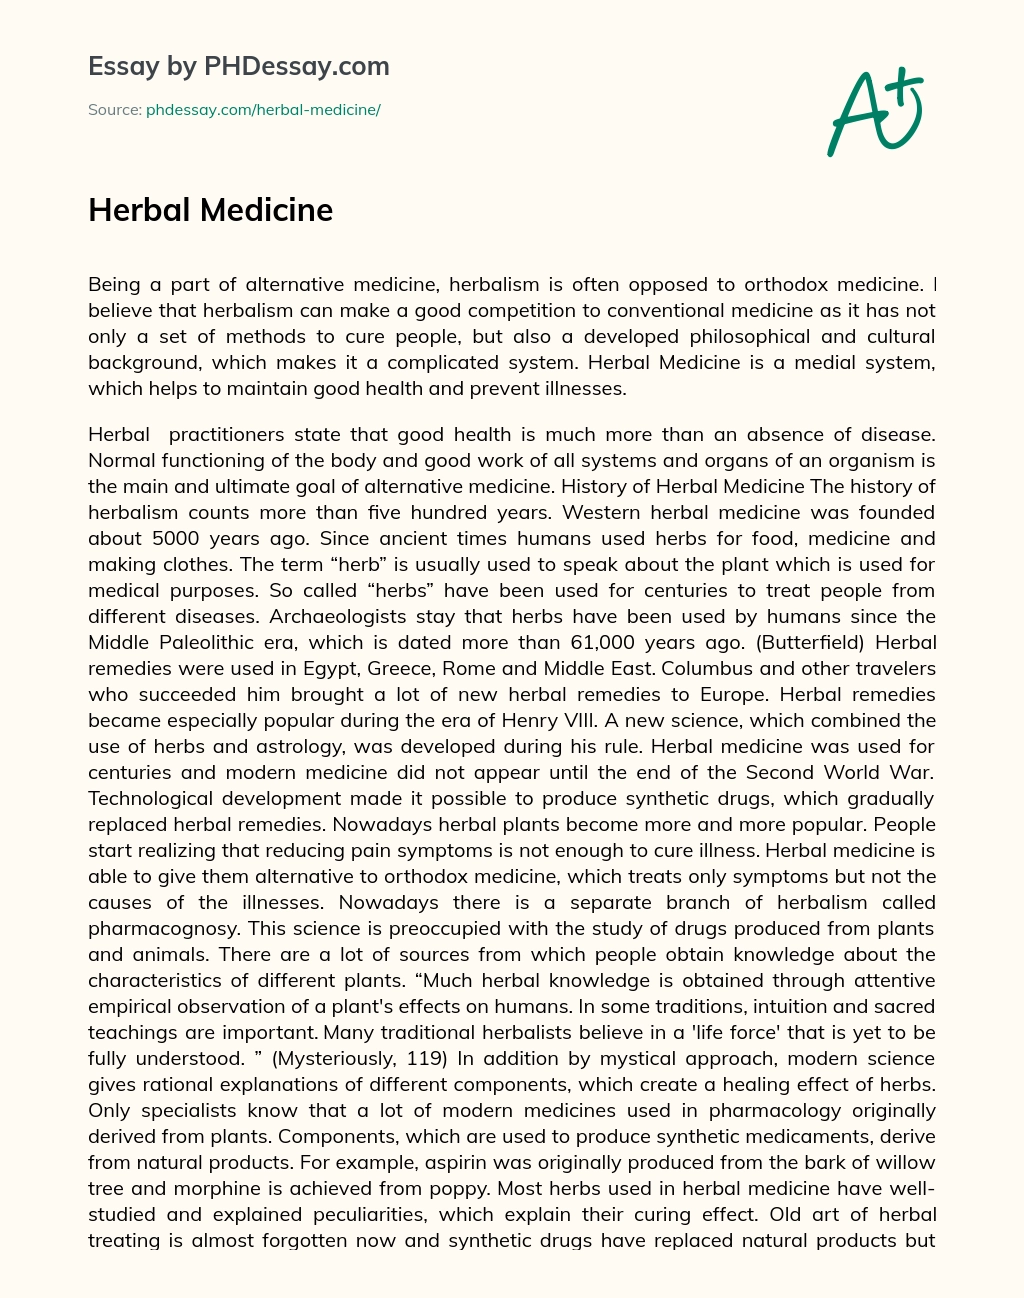 argumentative essay on herbal medicine